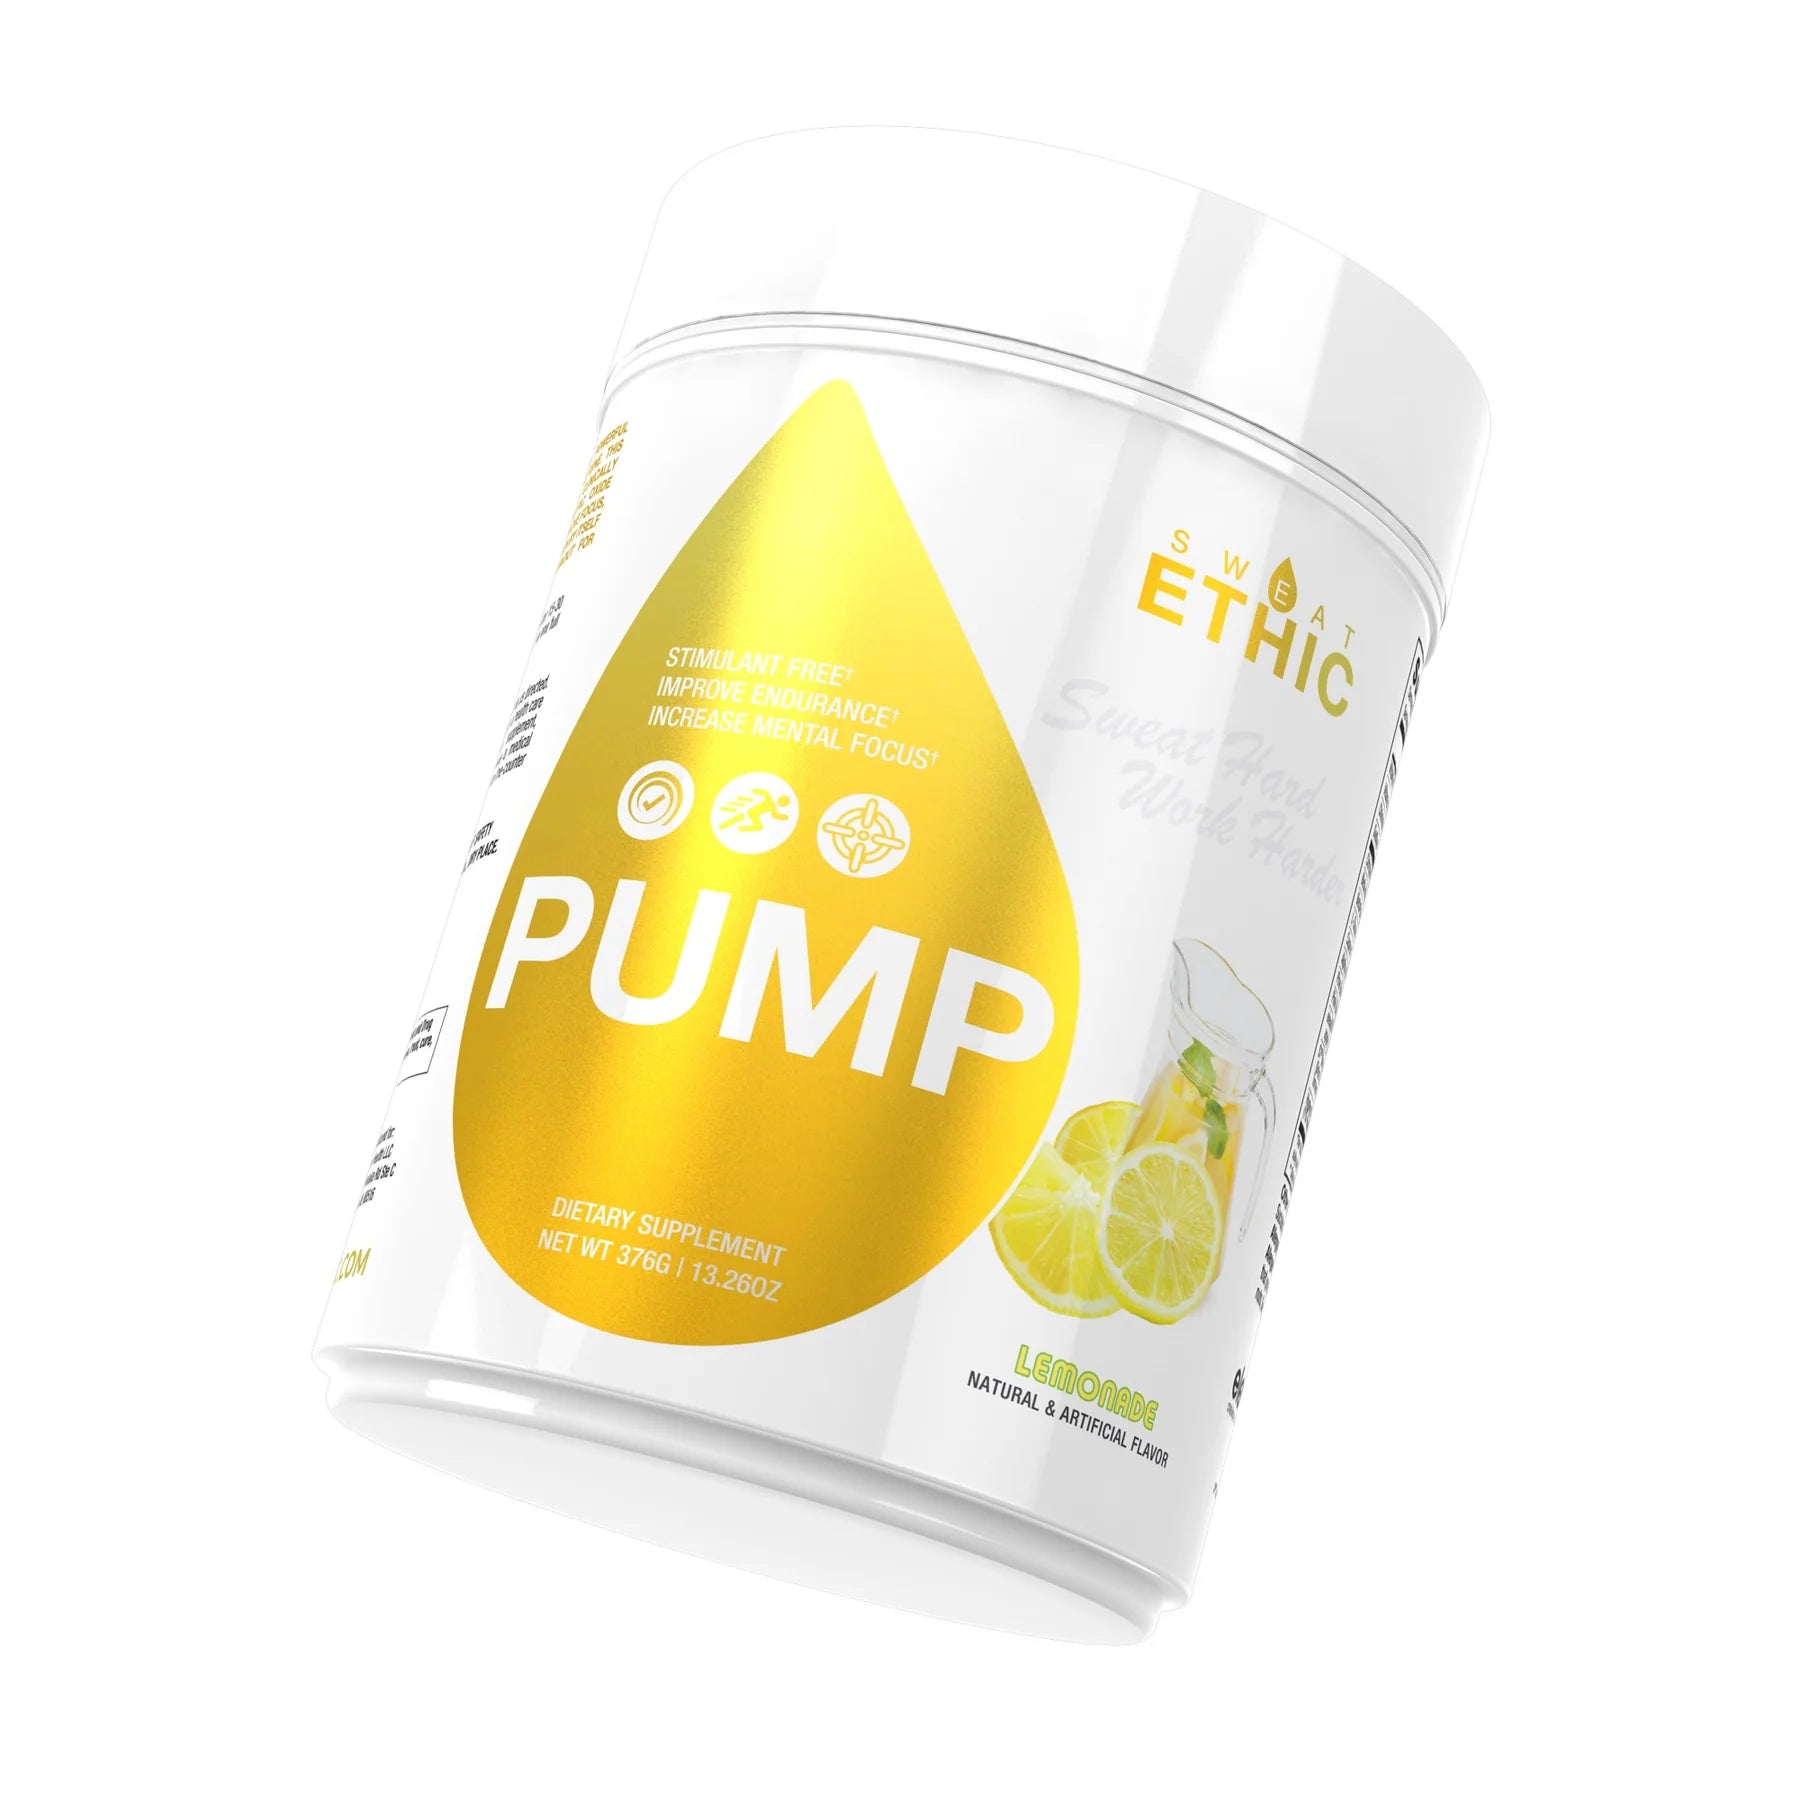 Sweat Ethic - Pump- Formulated Pump Factor